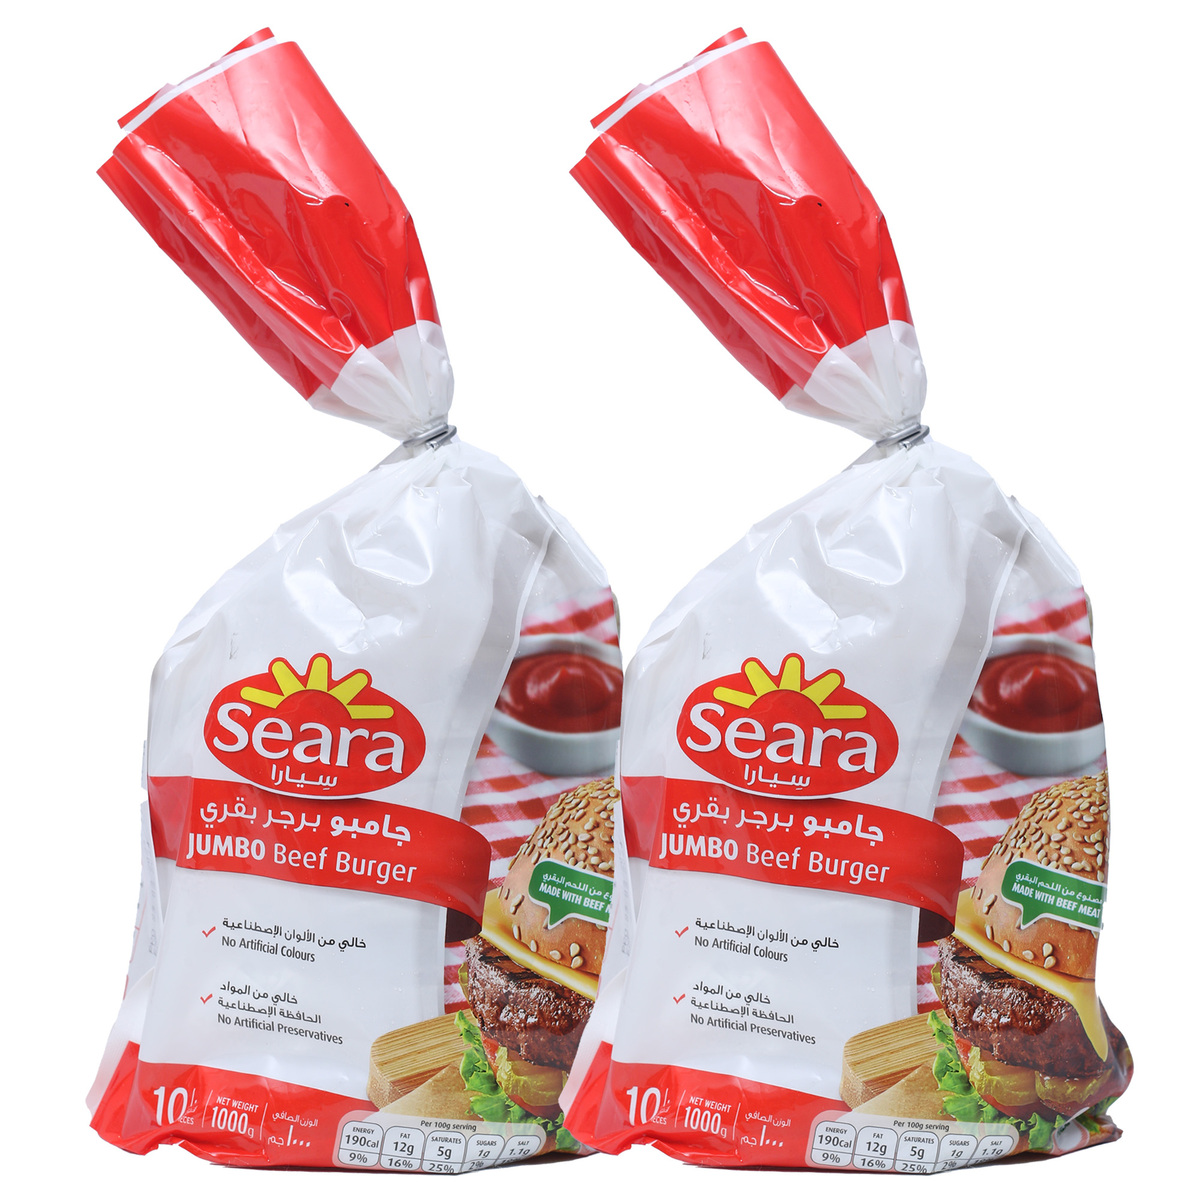 Seara Jumbo Beef Burger Value Pack 2 x 1 kg